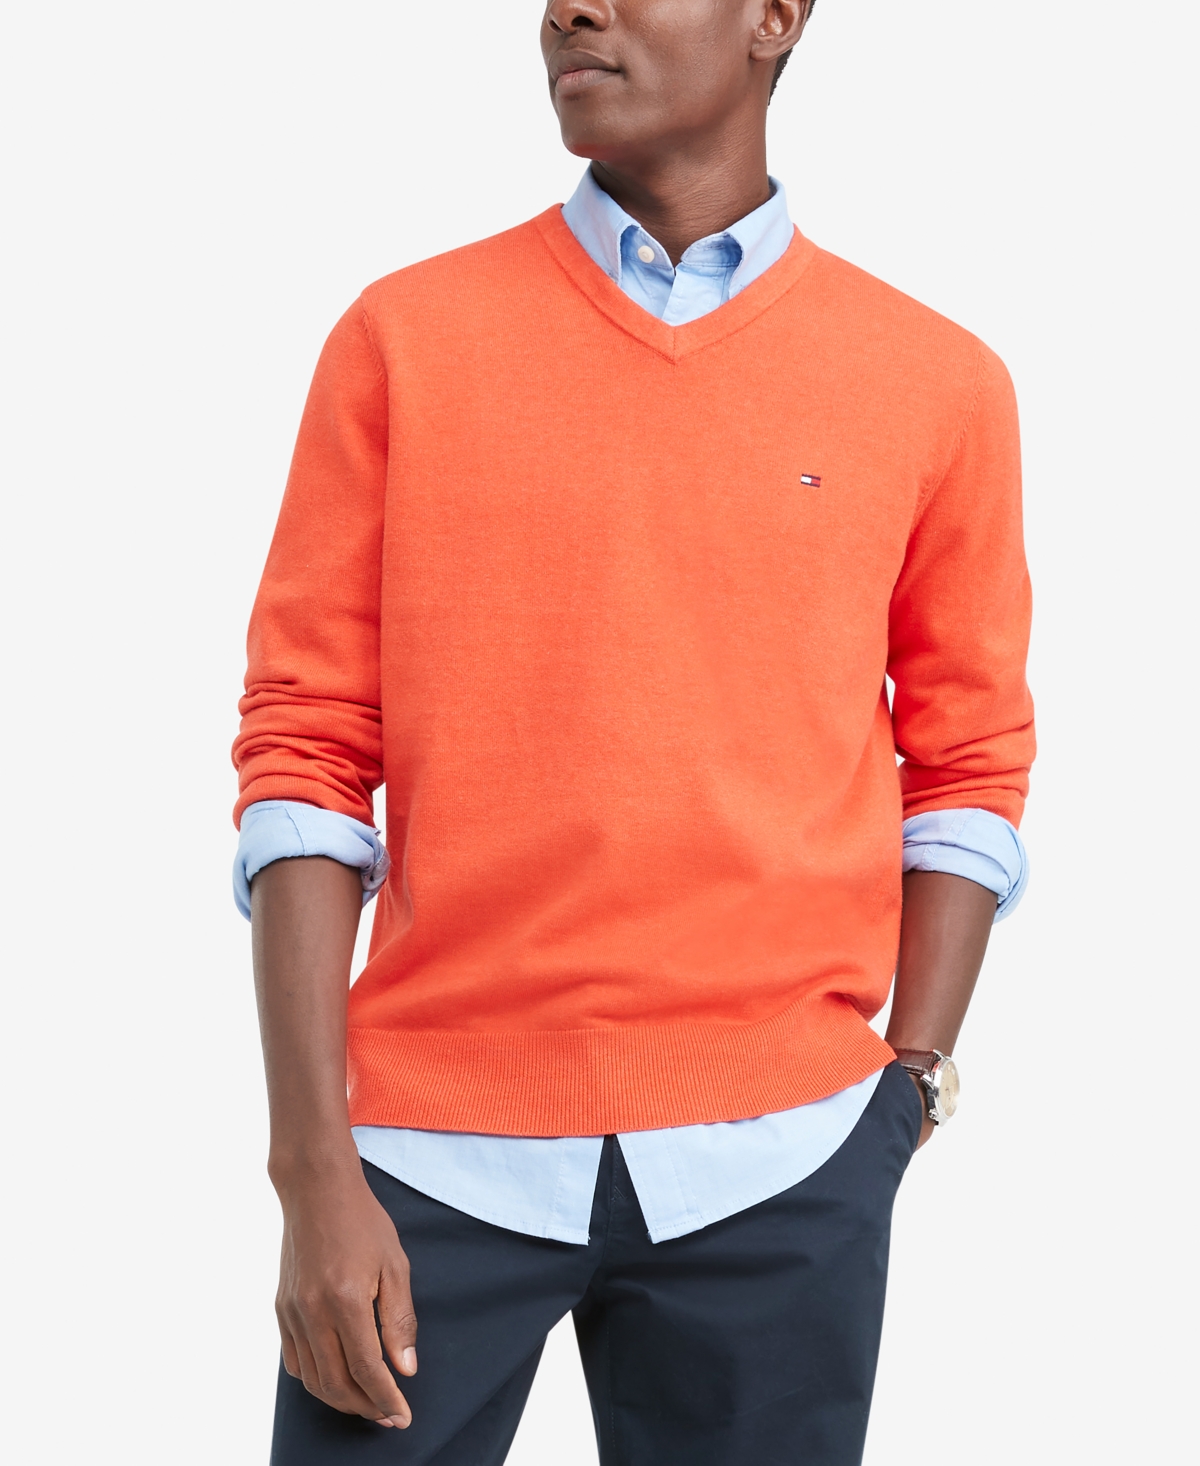 Behoort potlood Autonomie Tommy Hilfiger Men's Signature Solid V-Neck Sweater, Created for Macy's |  Smart Closet